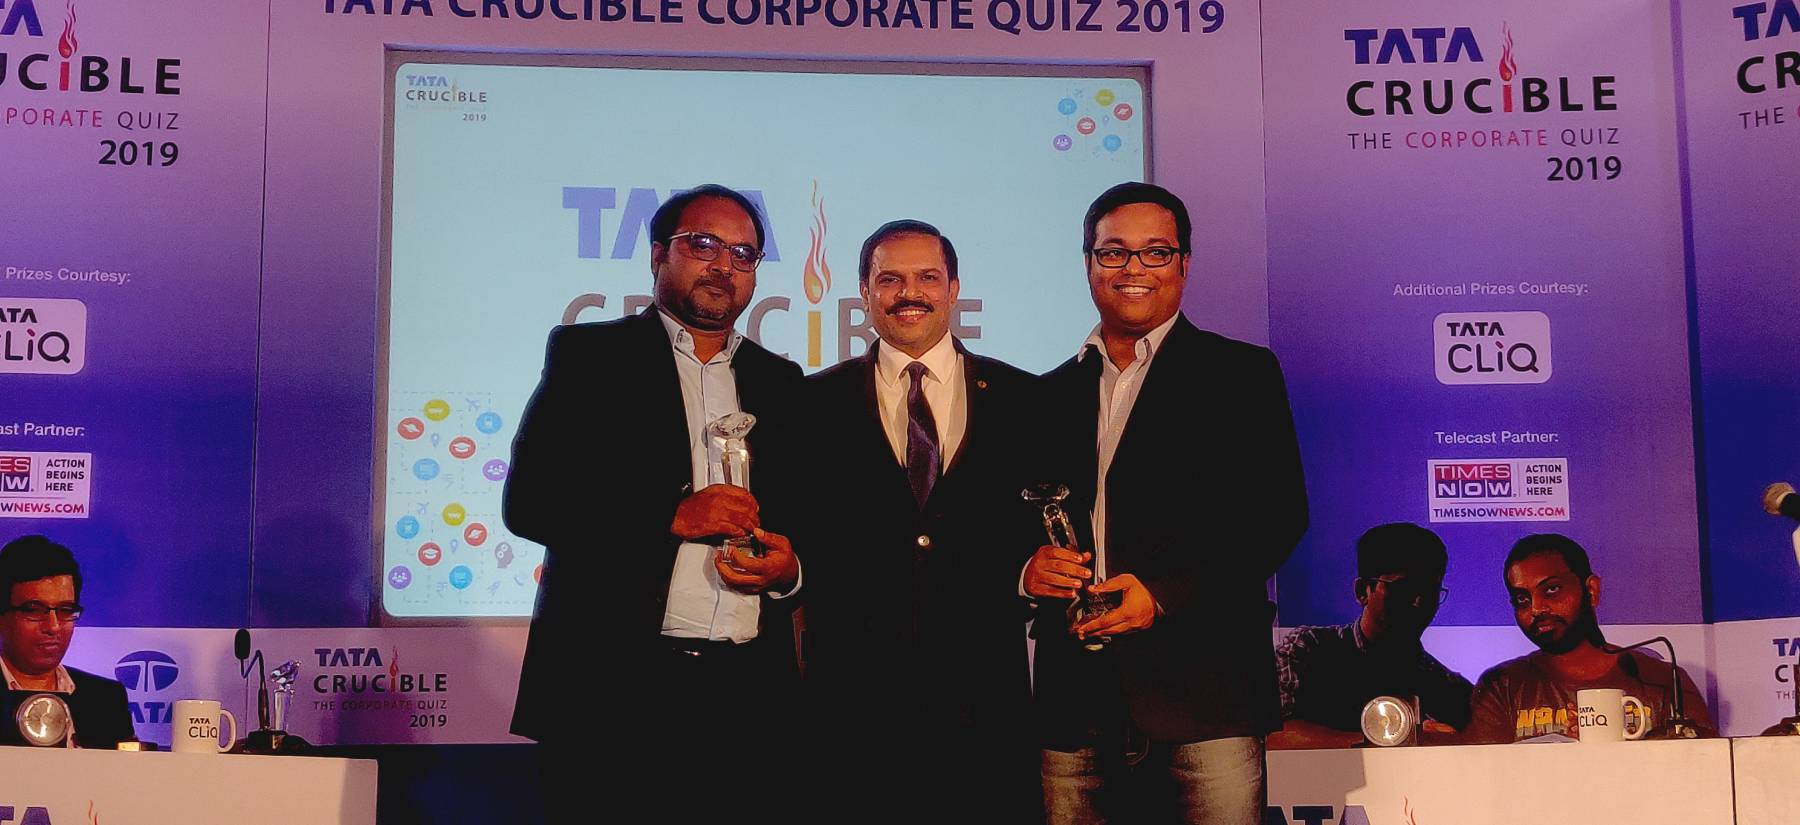 Tata Crucible Corporate Quiz Results For Winners - Novartis 